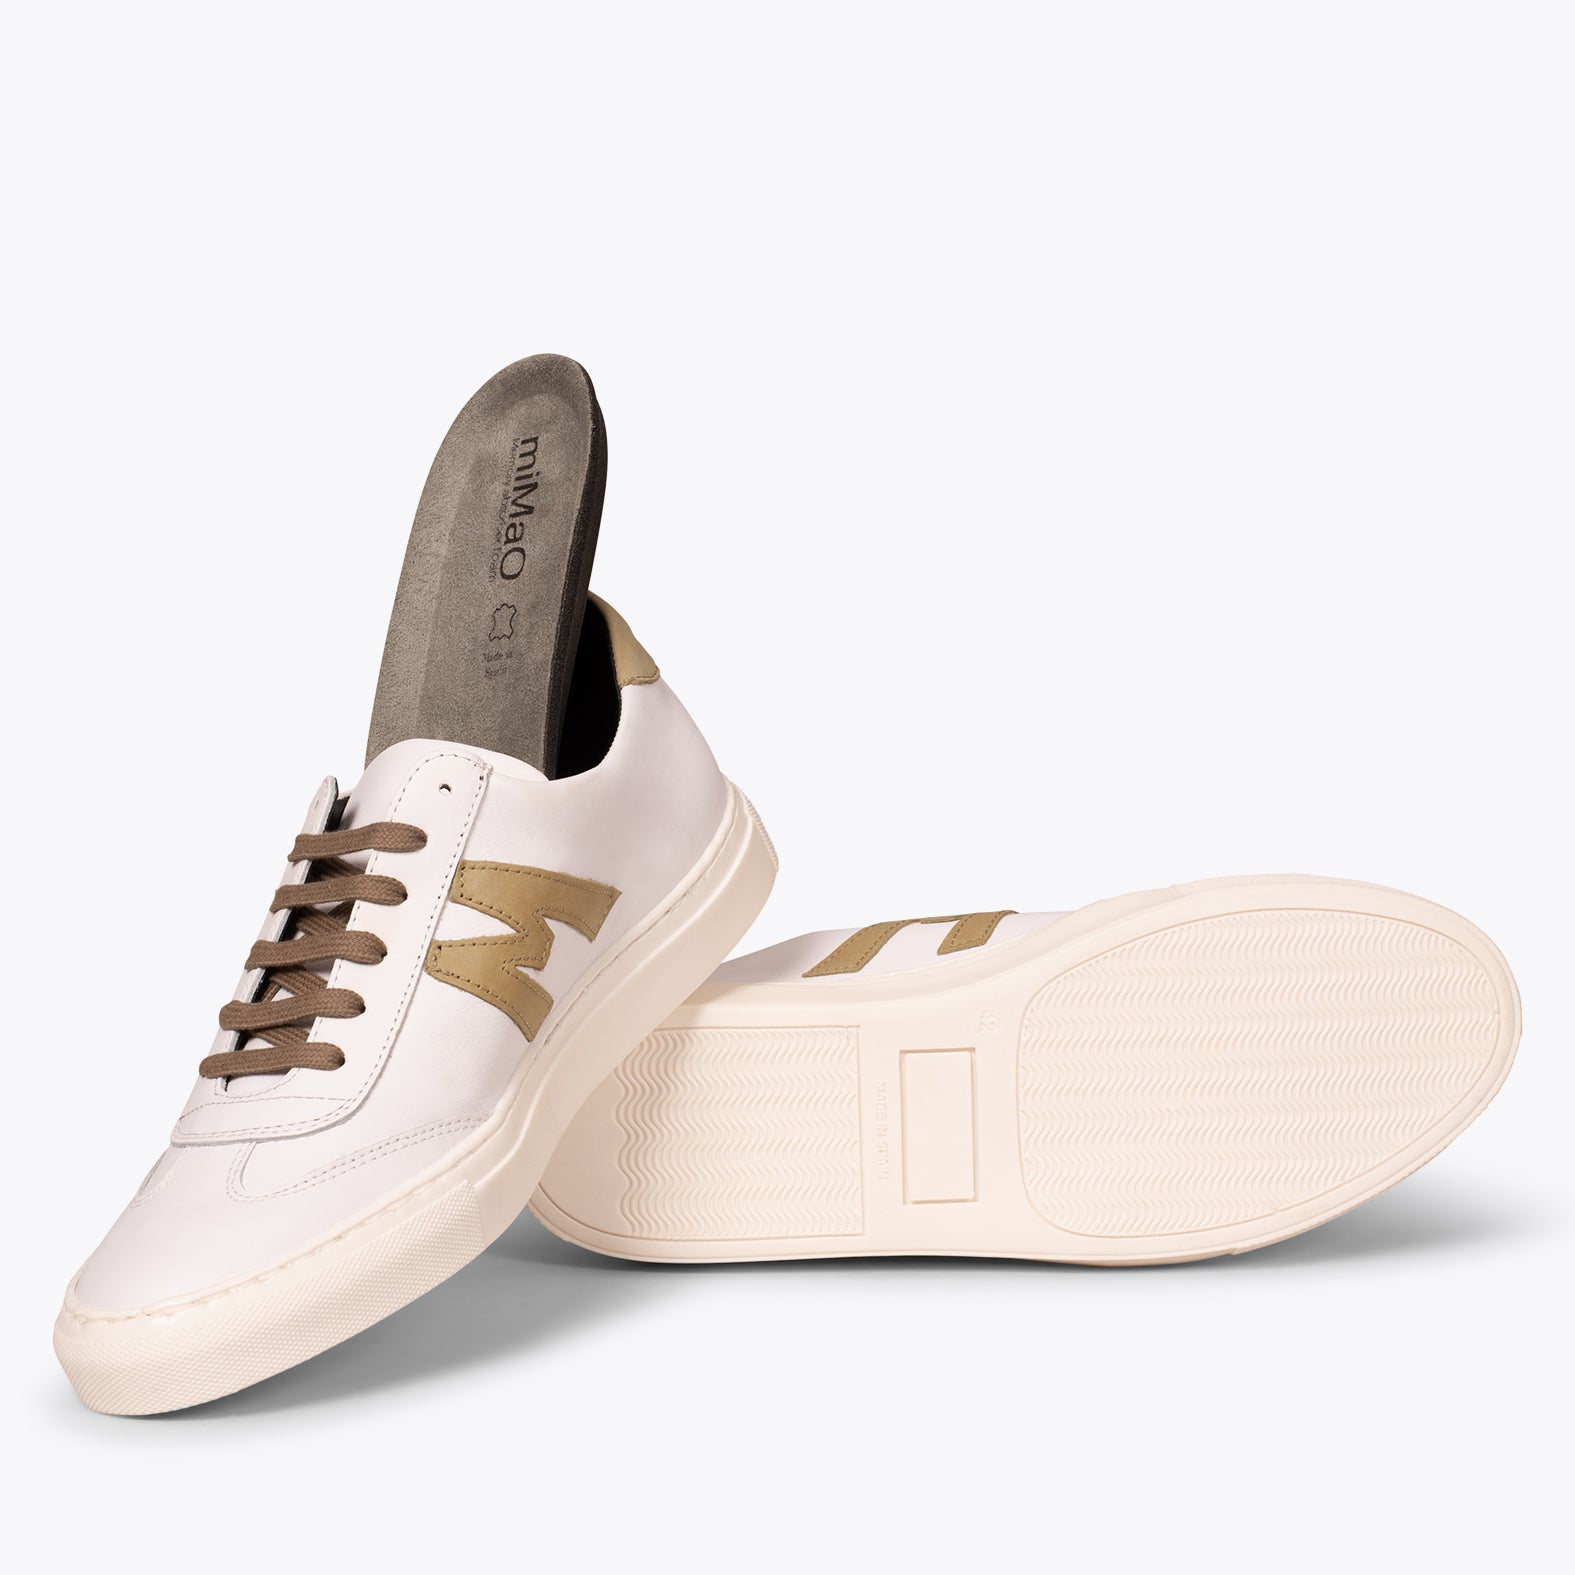 MONACO – TAUPE casual sneaker for men